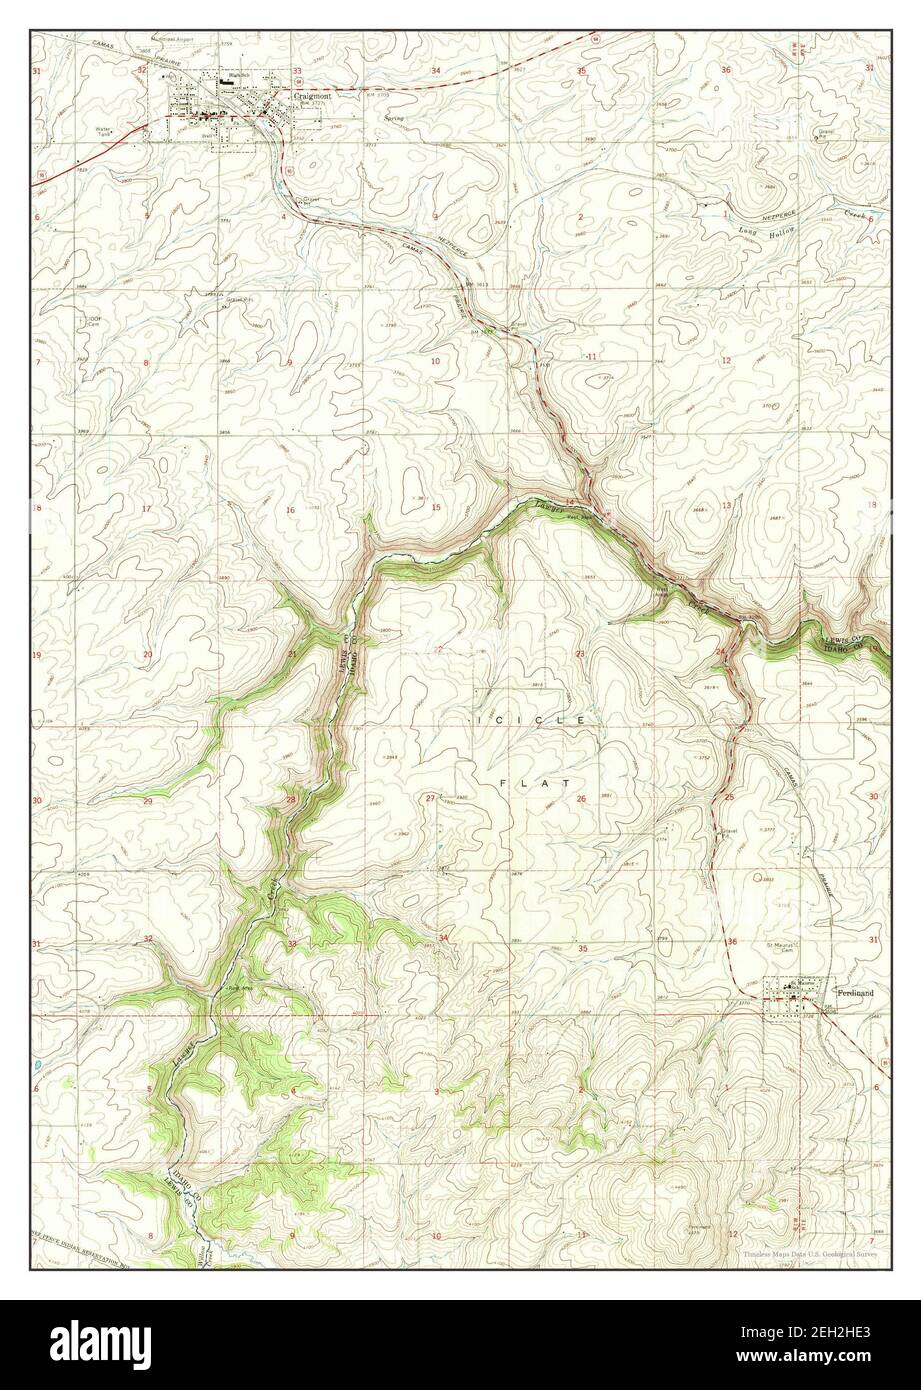 Craigmont, Idaho, map 1967, 1:24000, United States of America by Timeless Maps, data U.S. Geological Survey Stock Photo